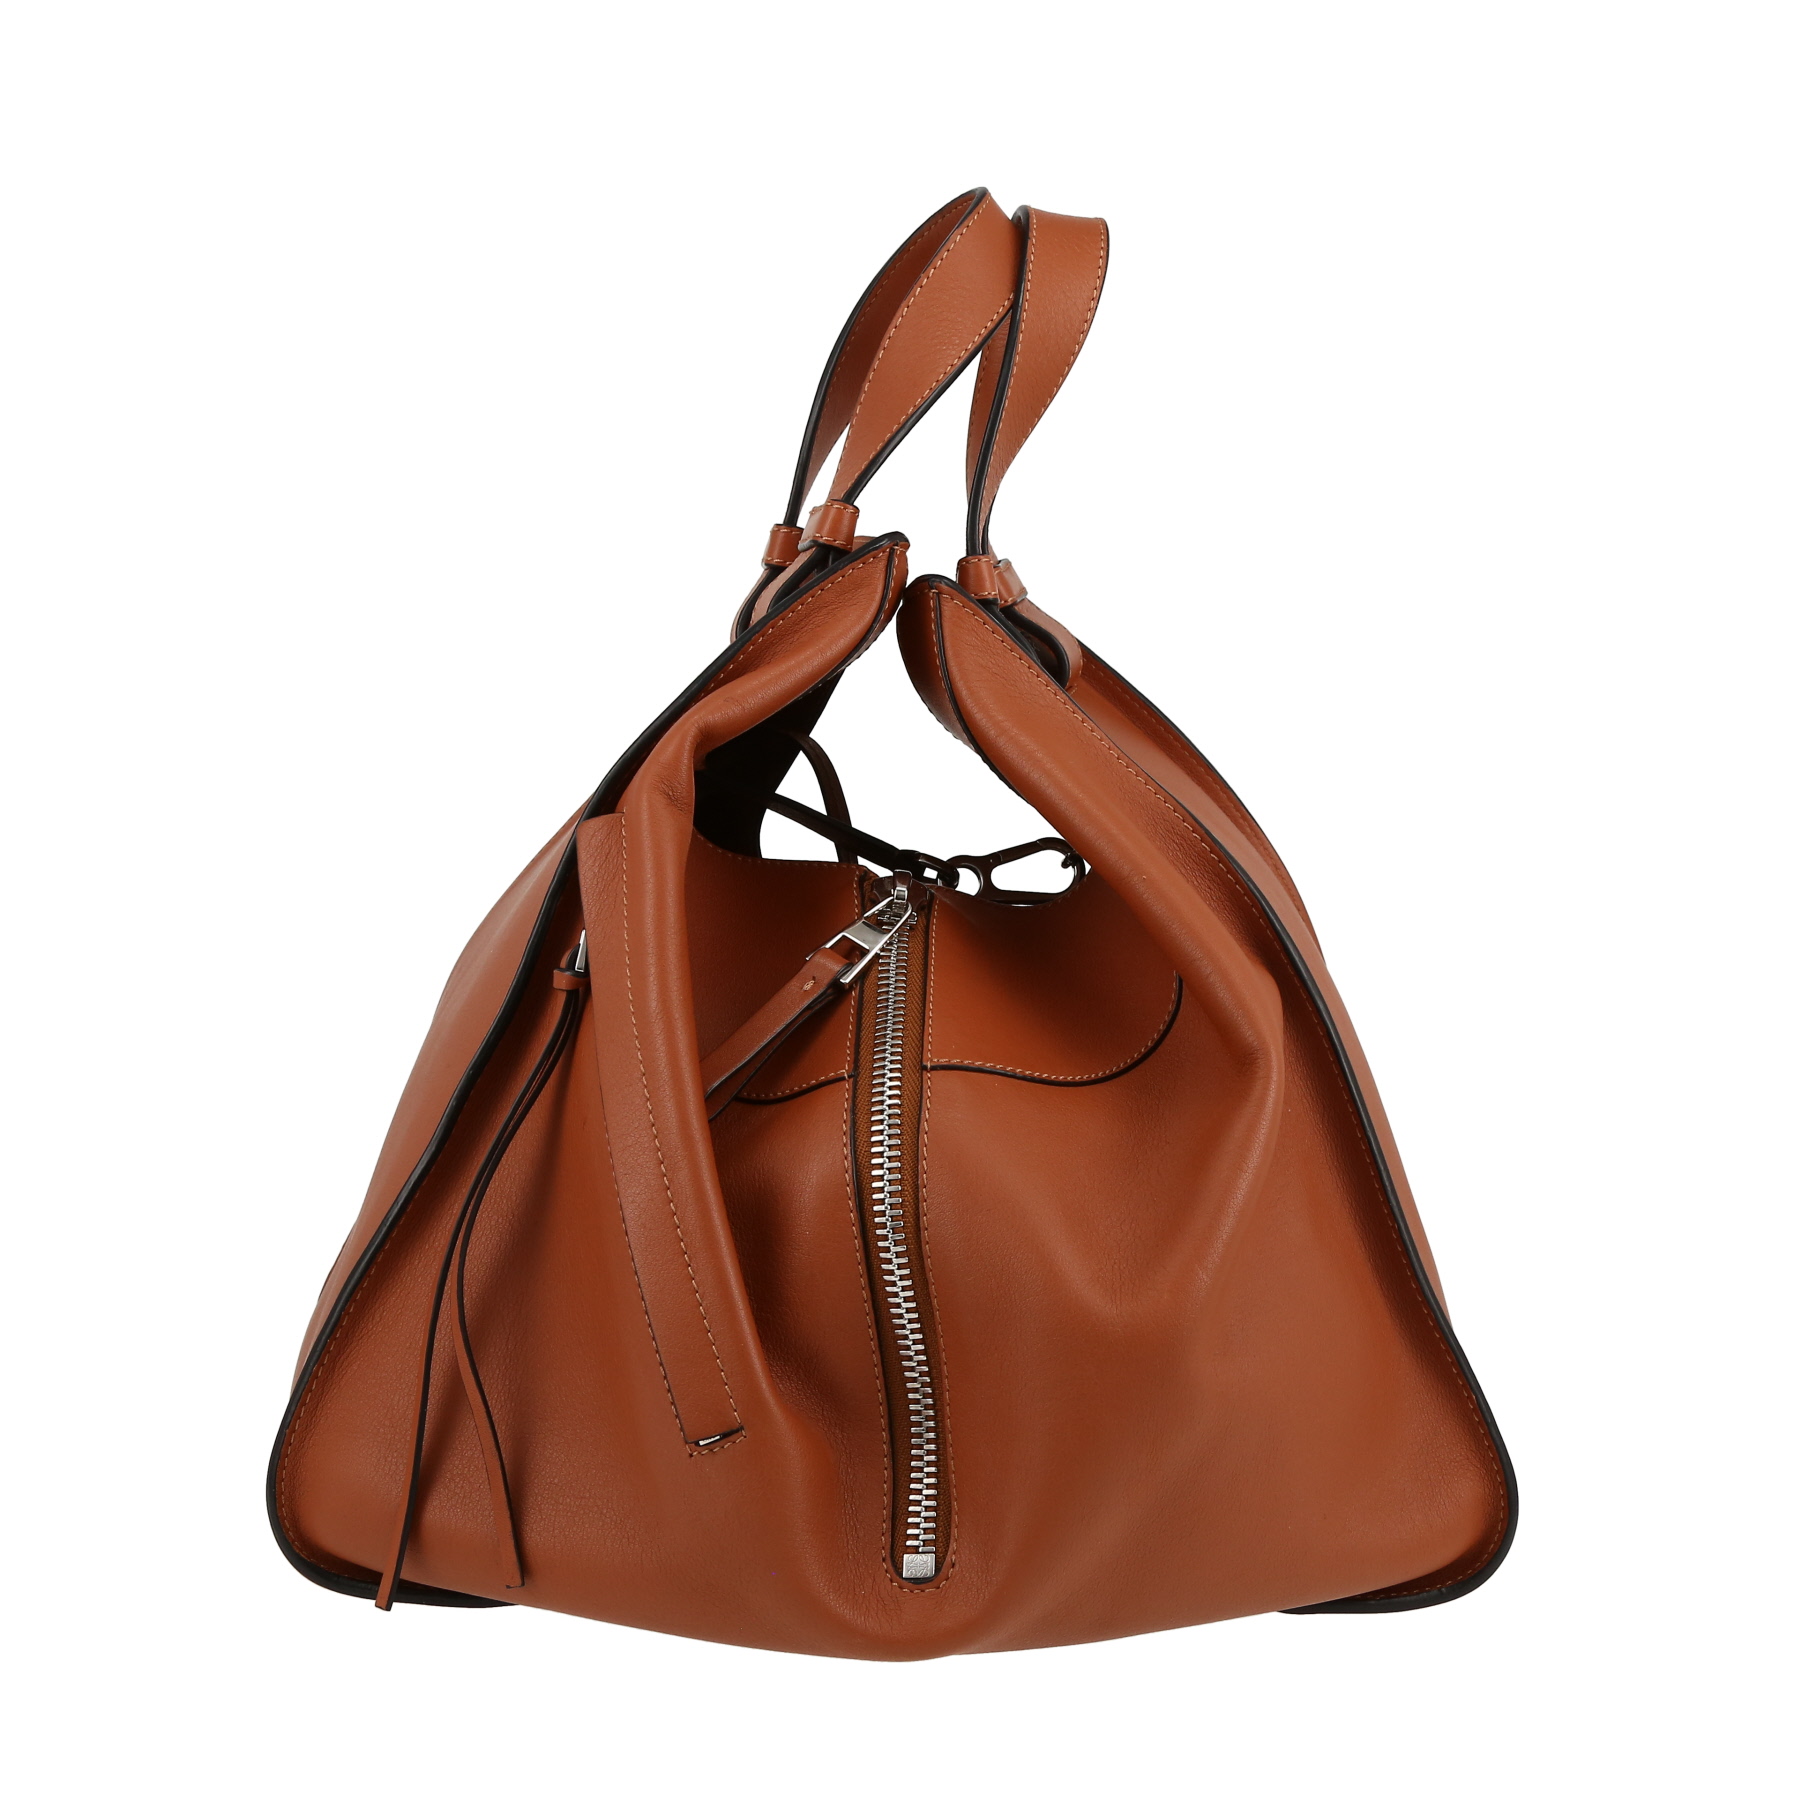 Hammock Large Model Handbag In Leather